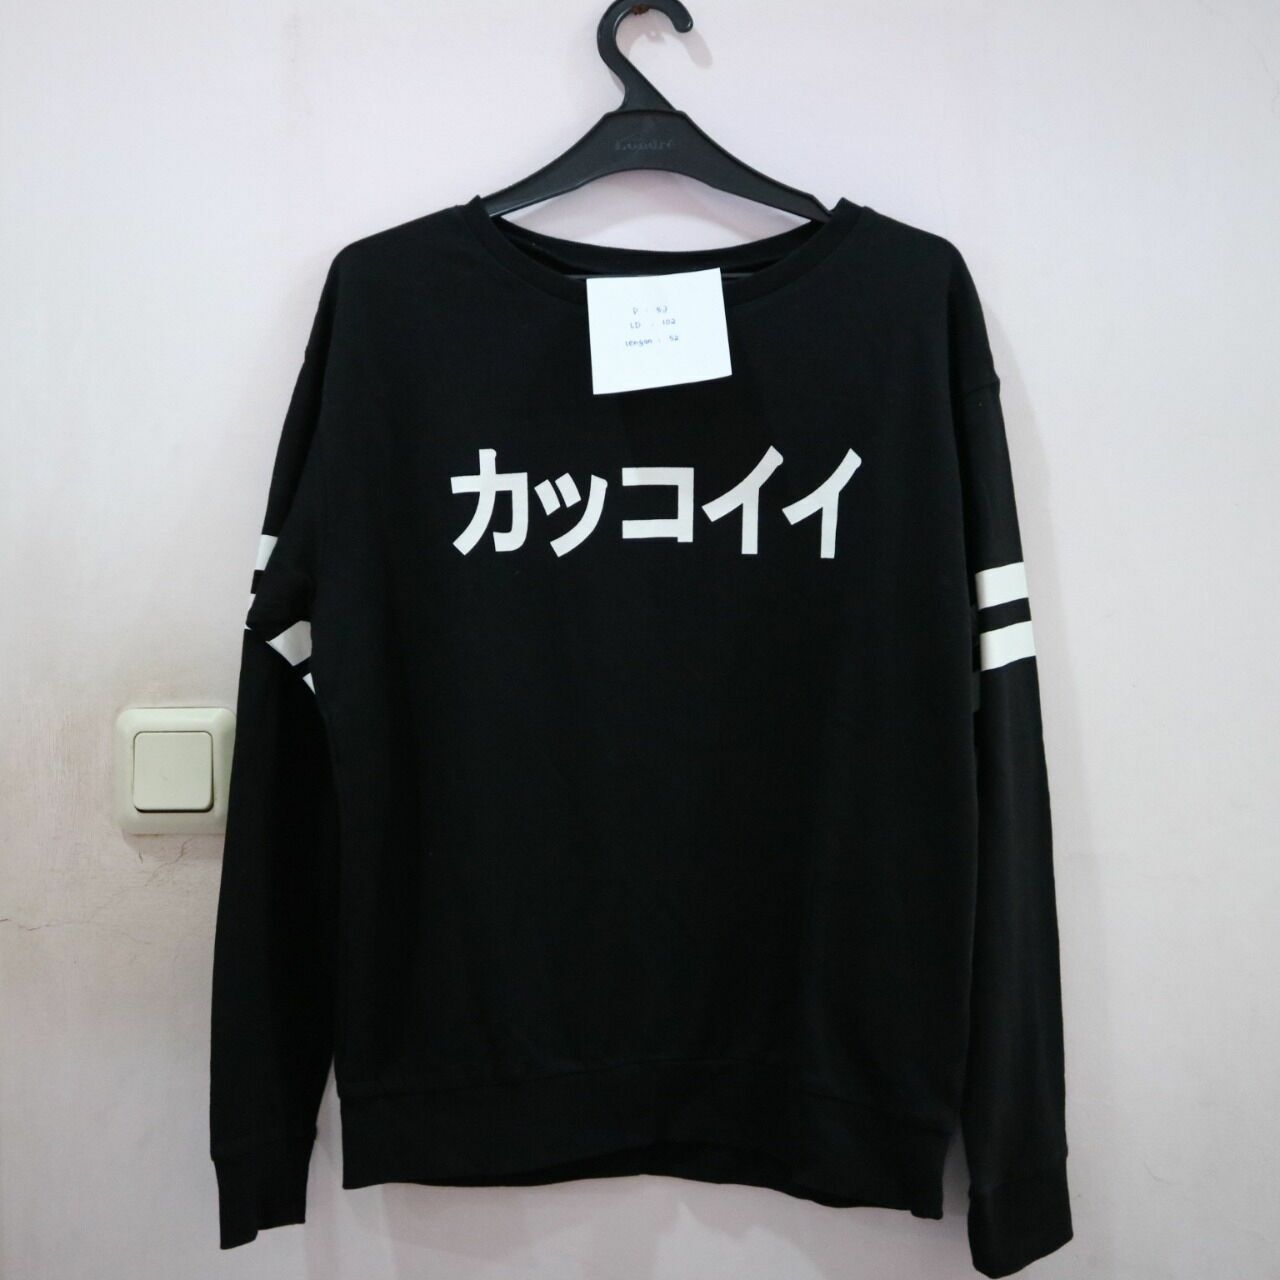 H&m Black Sweater